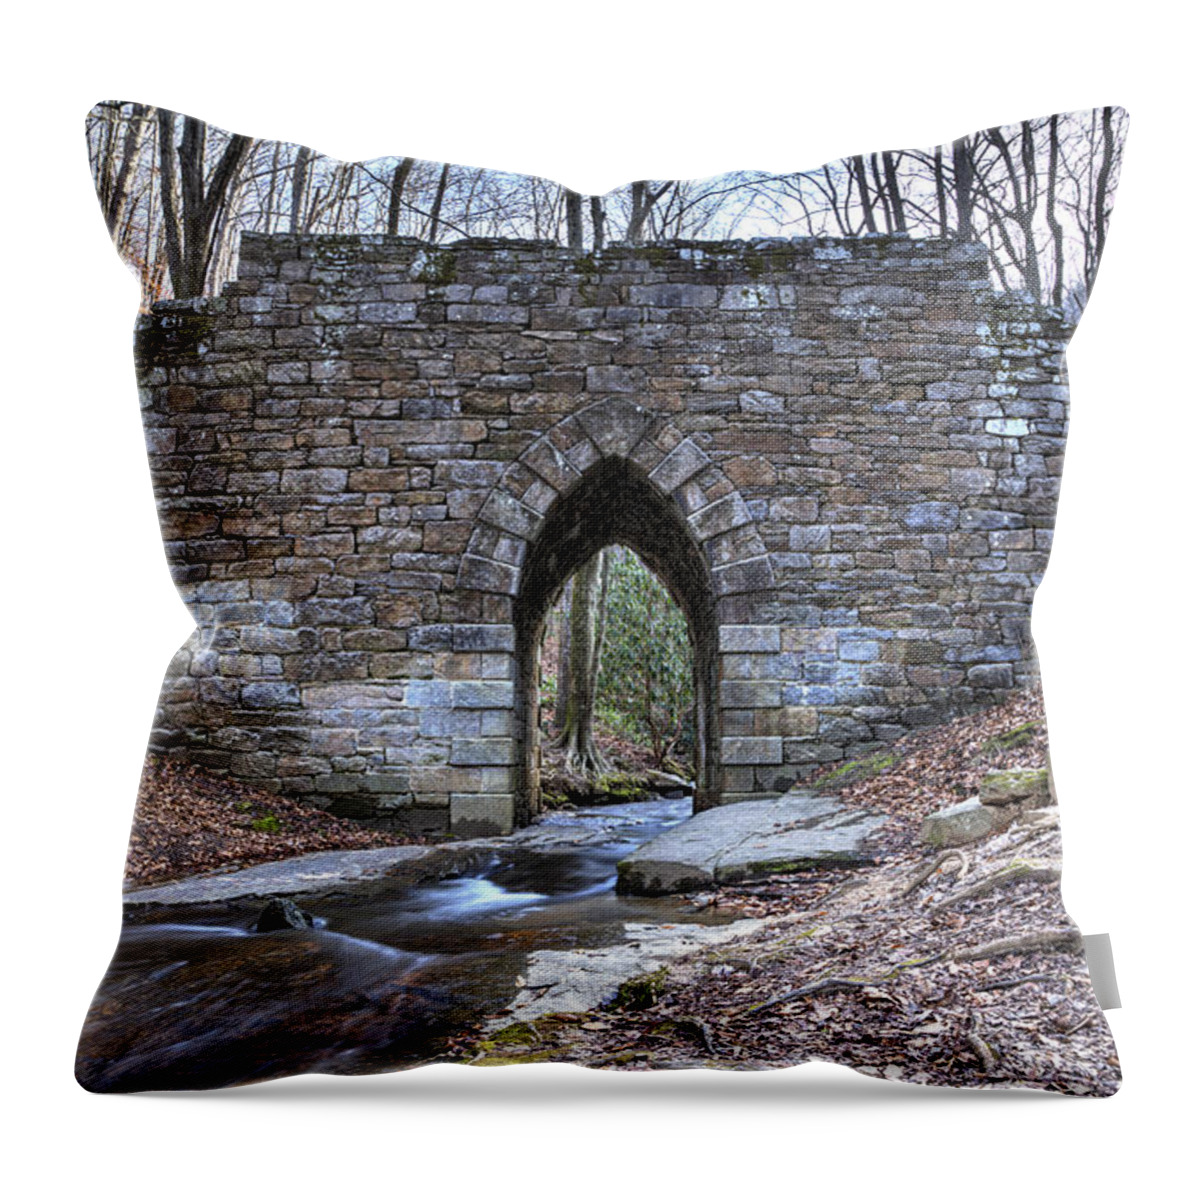 Stone Bridge Throw Pillow featuring the photograph Poinsett Stone Bridge-1 by Charles Hite